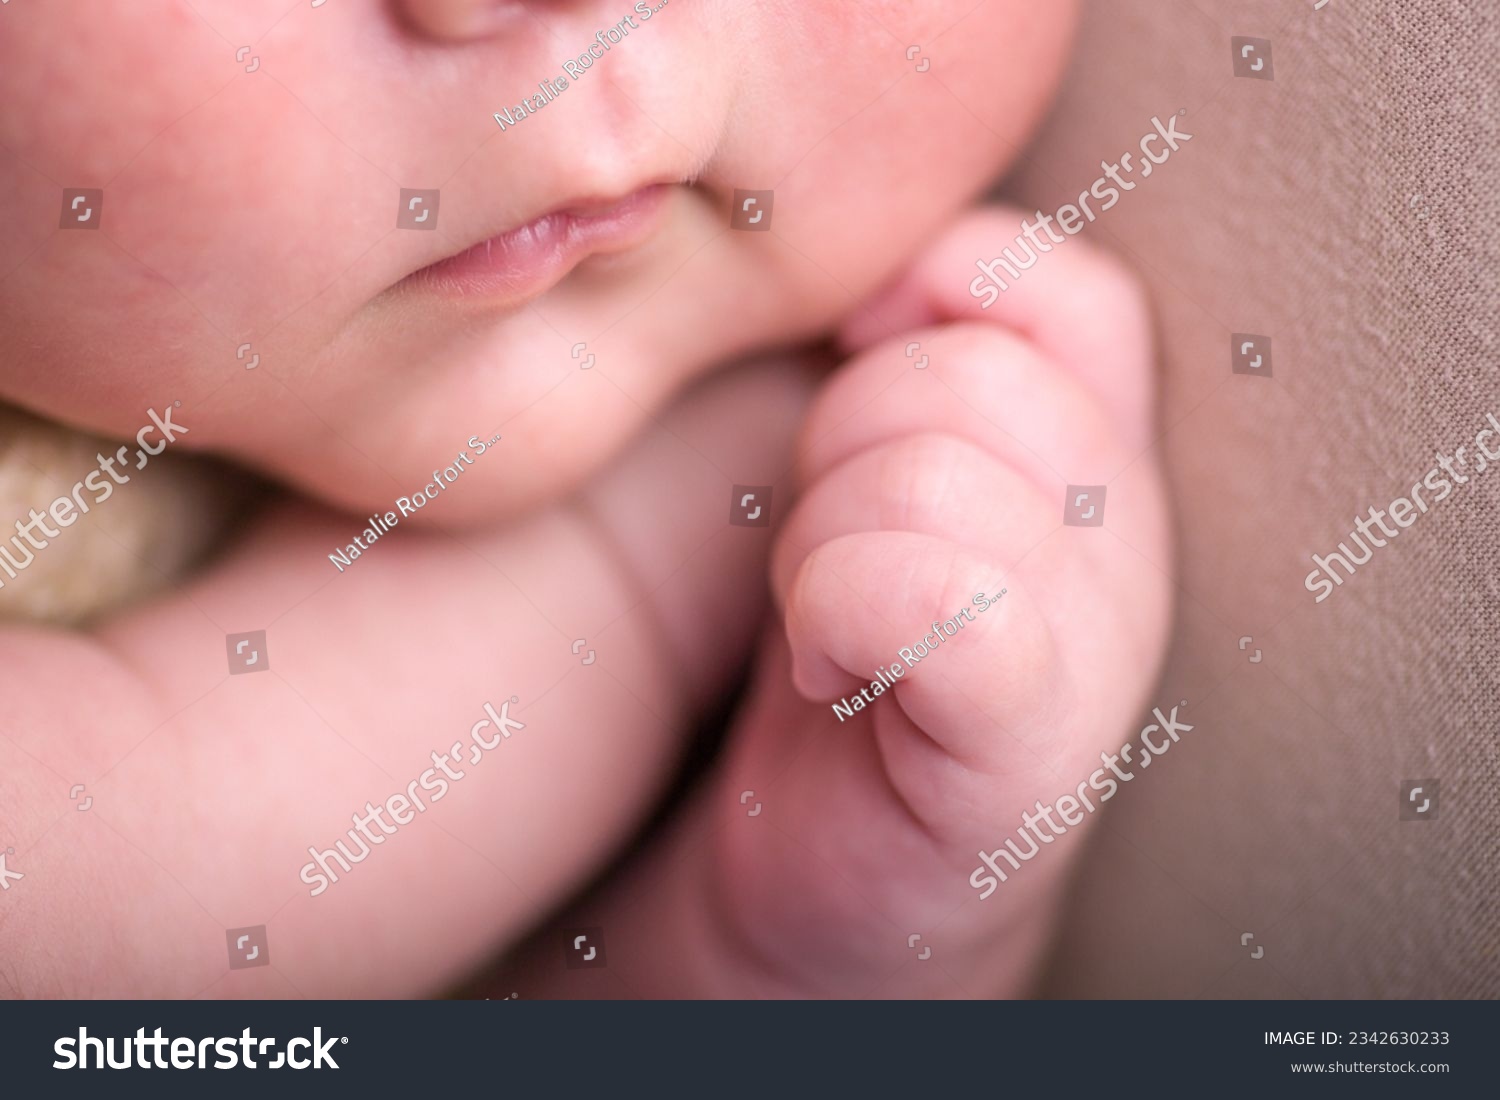 Newborn baby details macro photography toes fingers head lips ears #2342630233